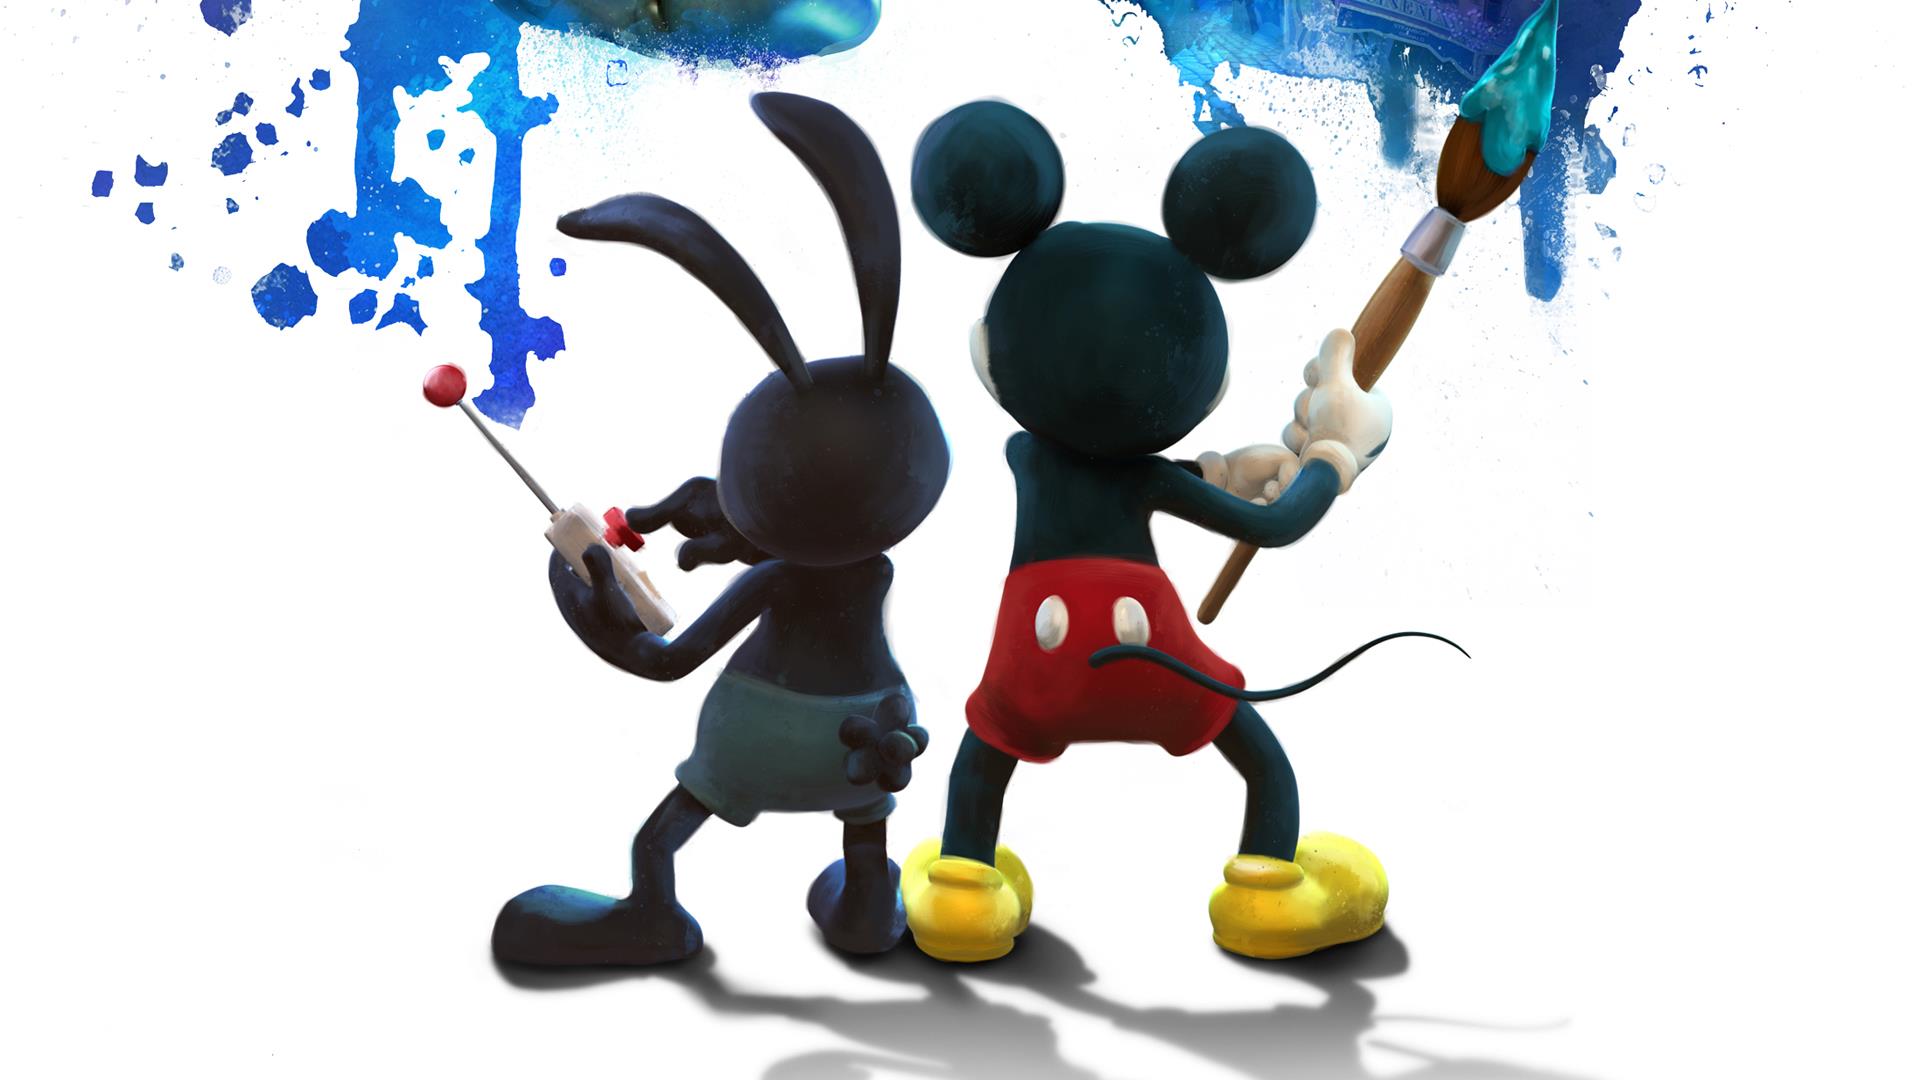 Descargar fondos de escritorio de Epic Mickey 2: The Power Of Two HD